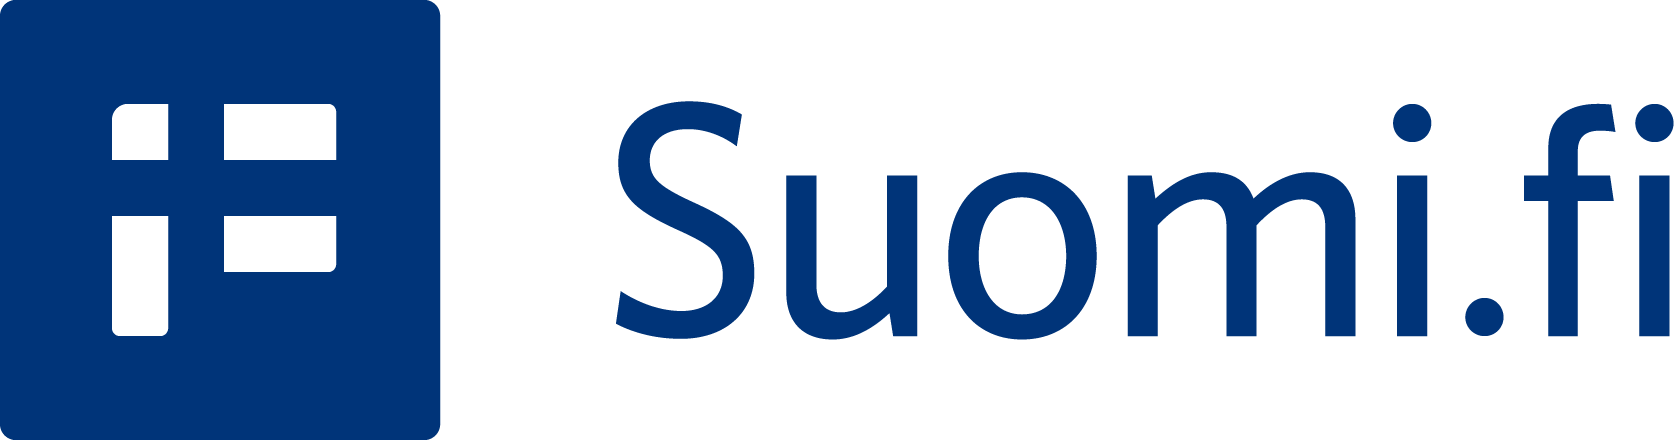 Suomi.fi:n logo.